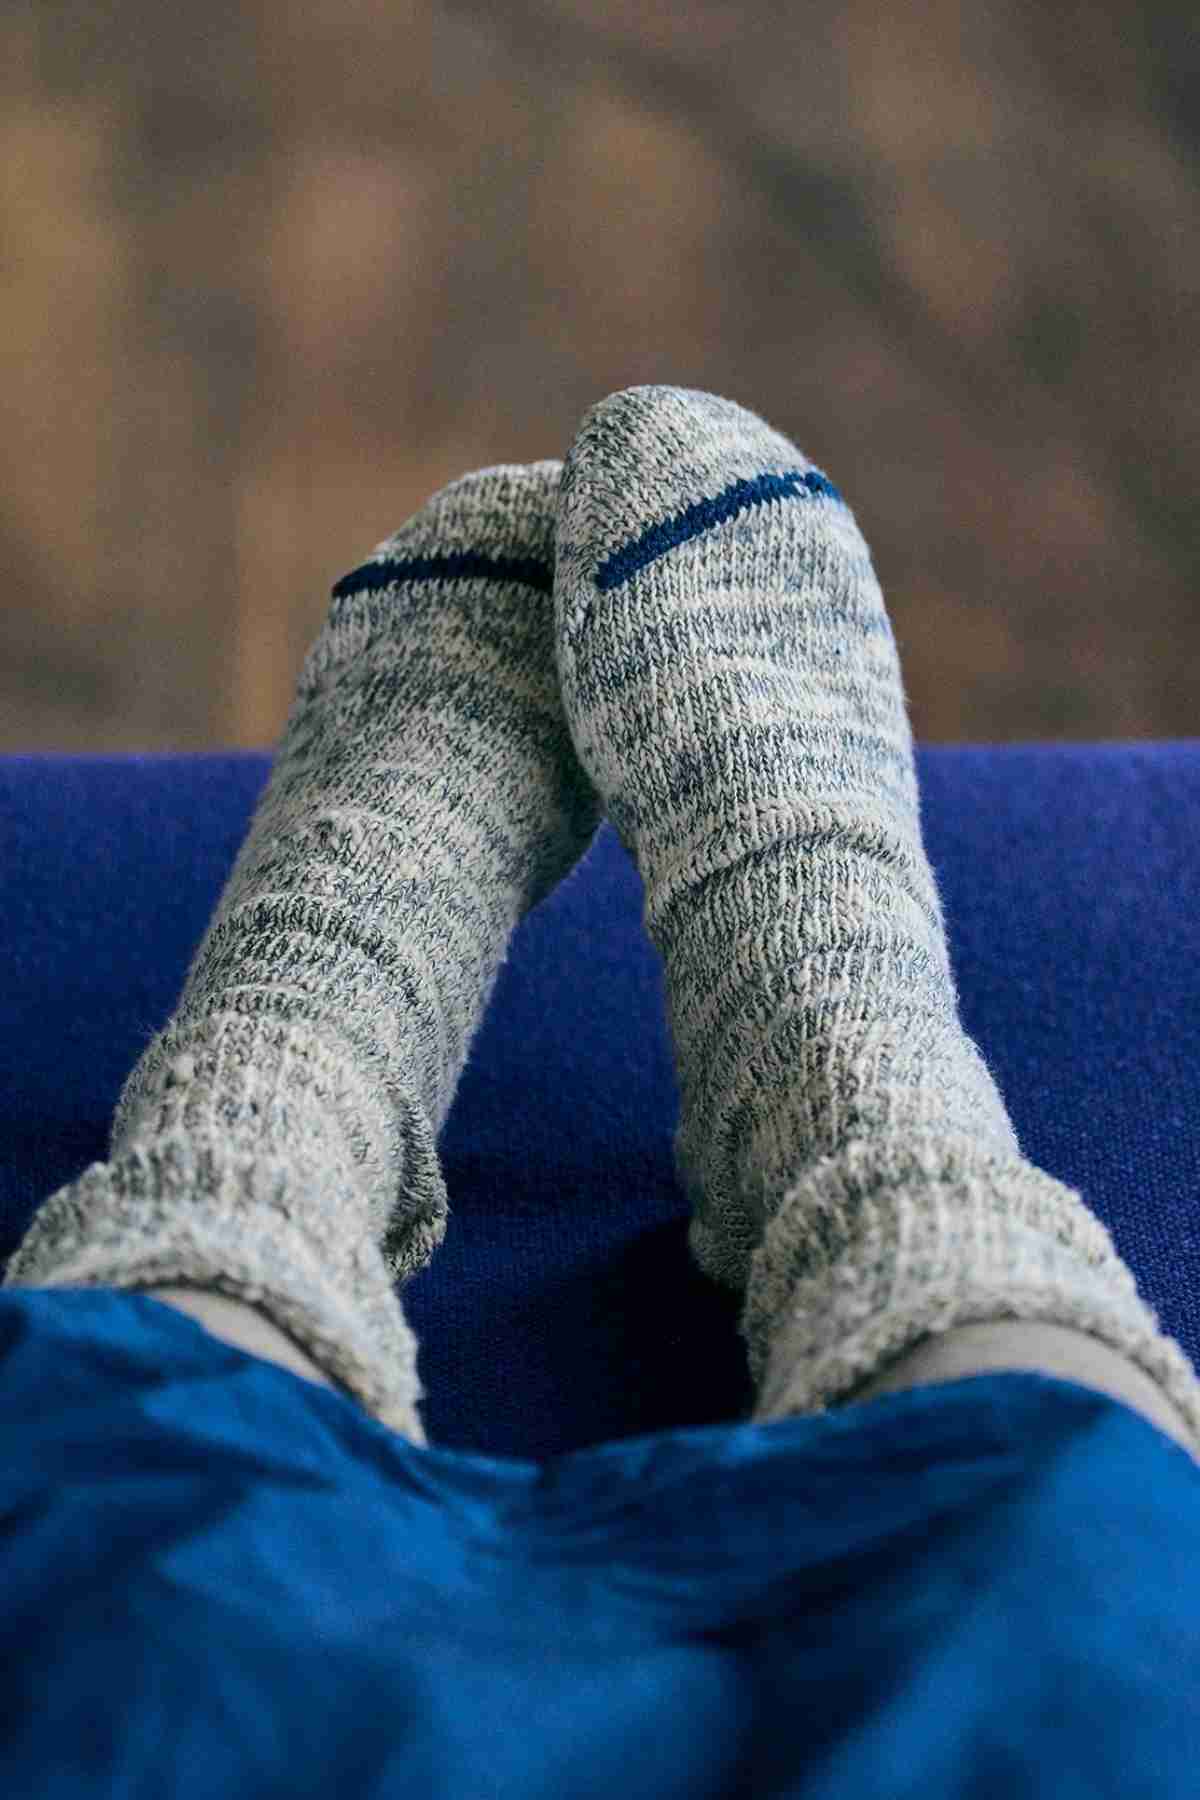 Garabou Indigo Blue Socks with blue skirt on feet 1 pair